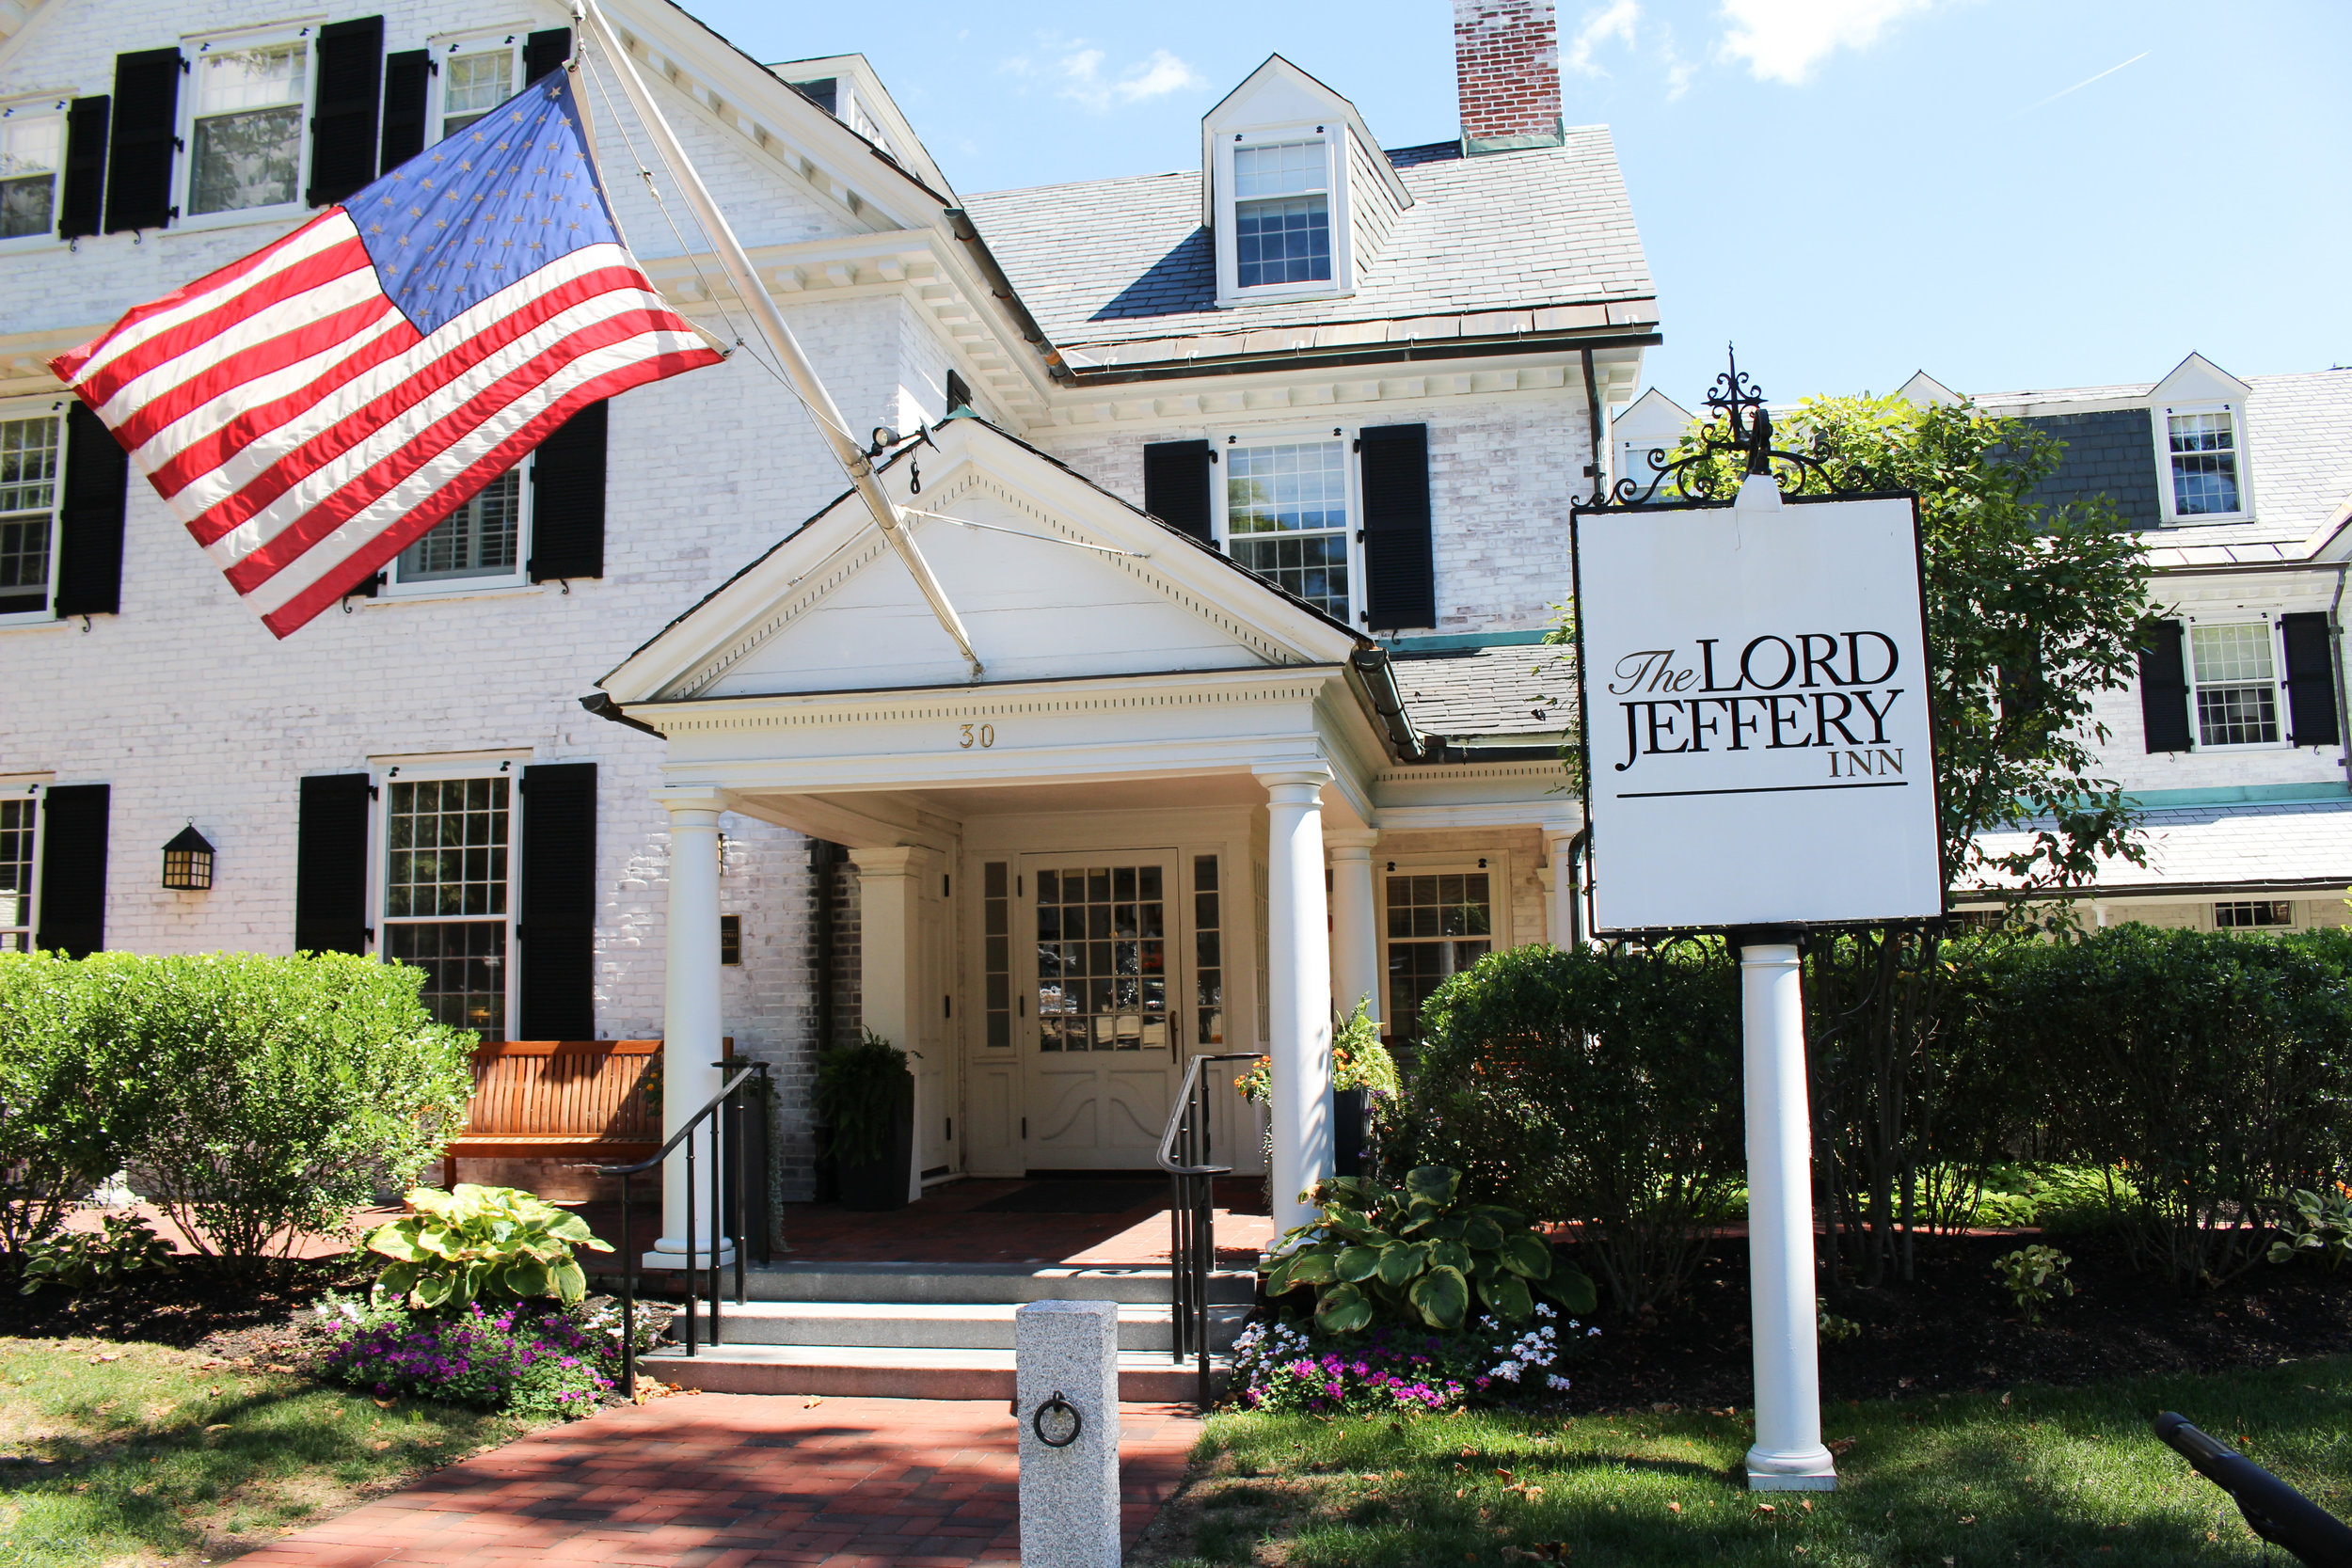 The Lord Jeffrey Inn. Amherst, MA